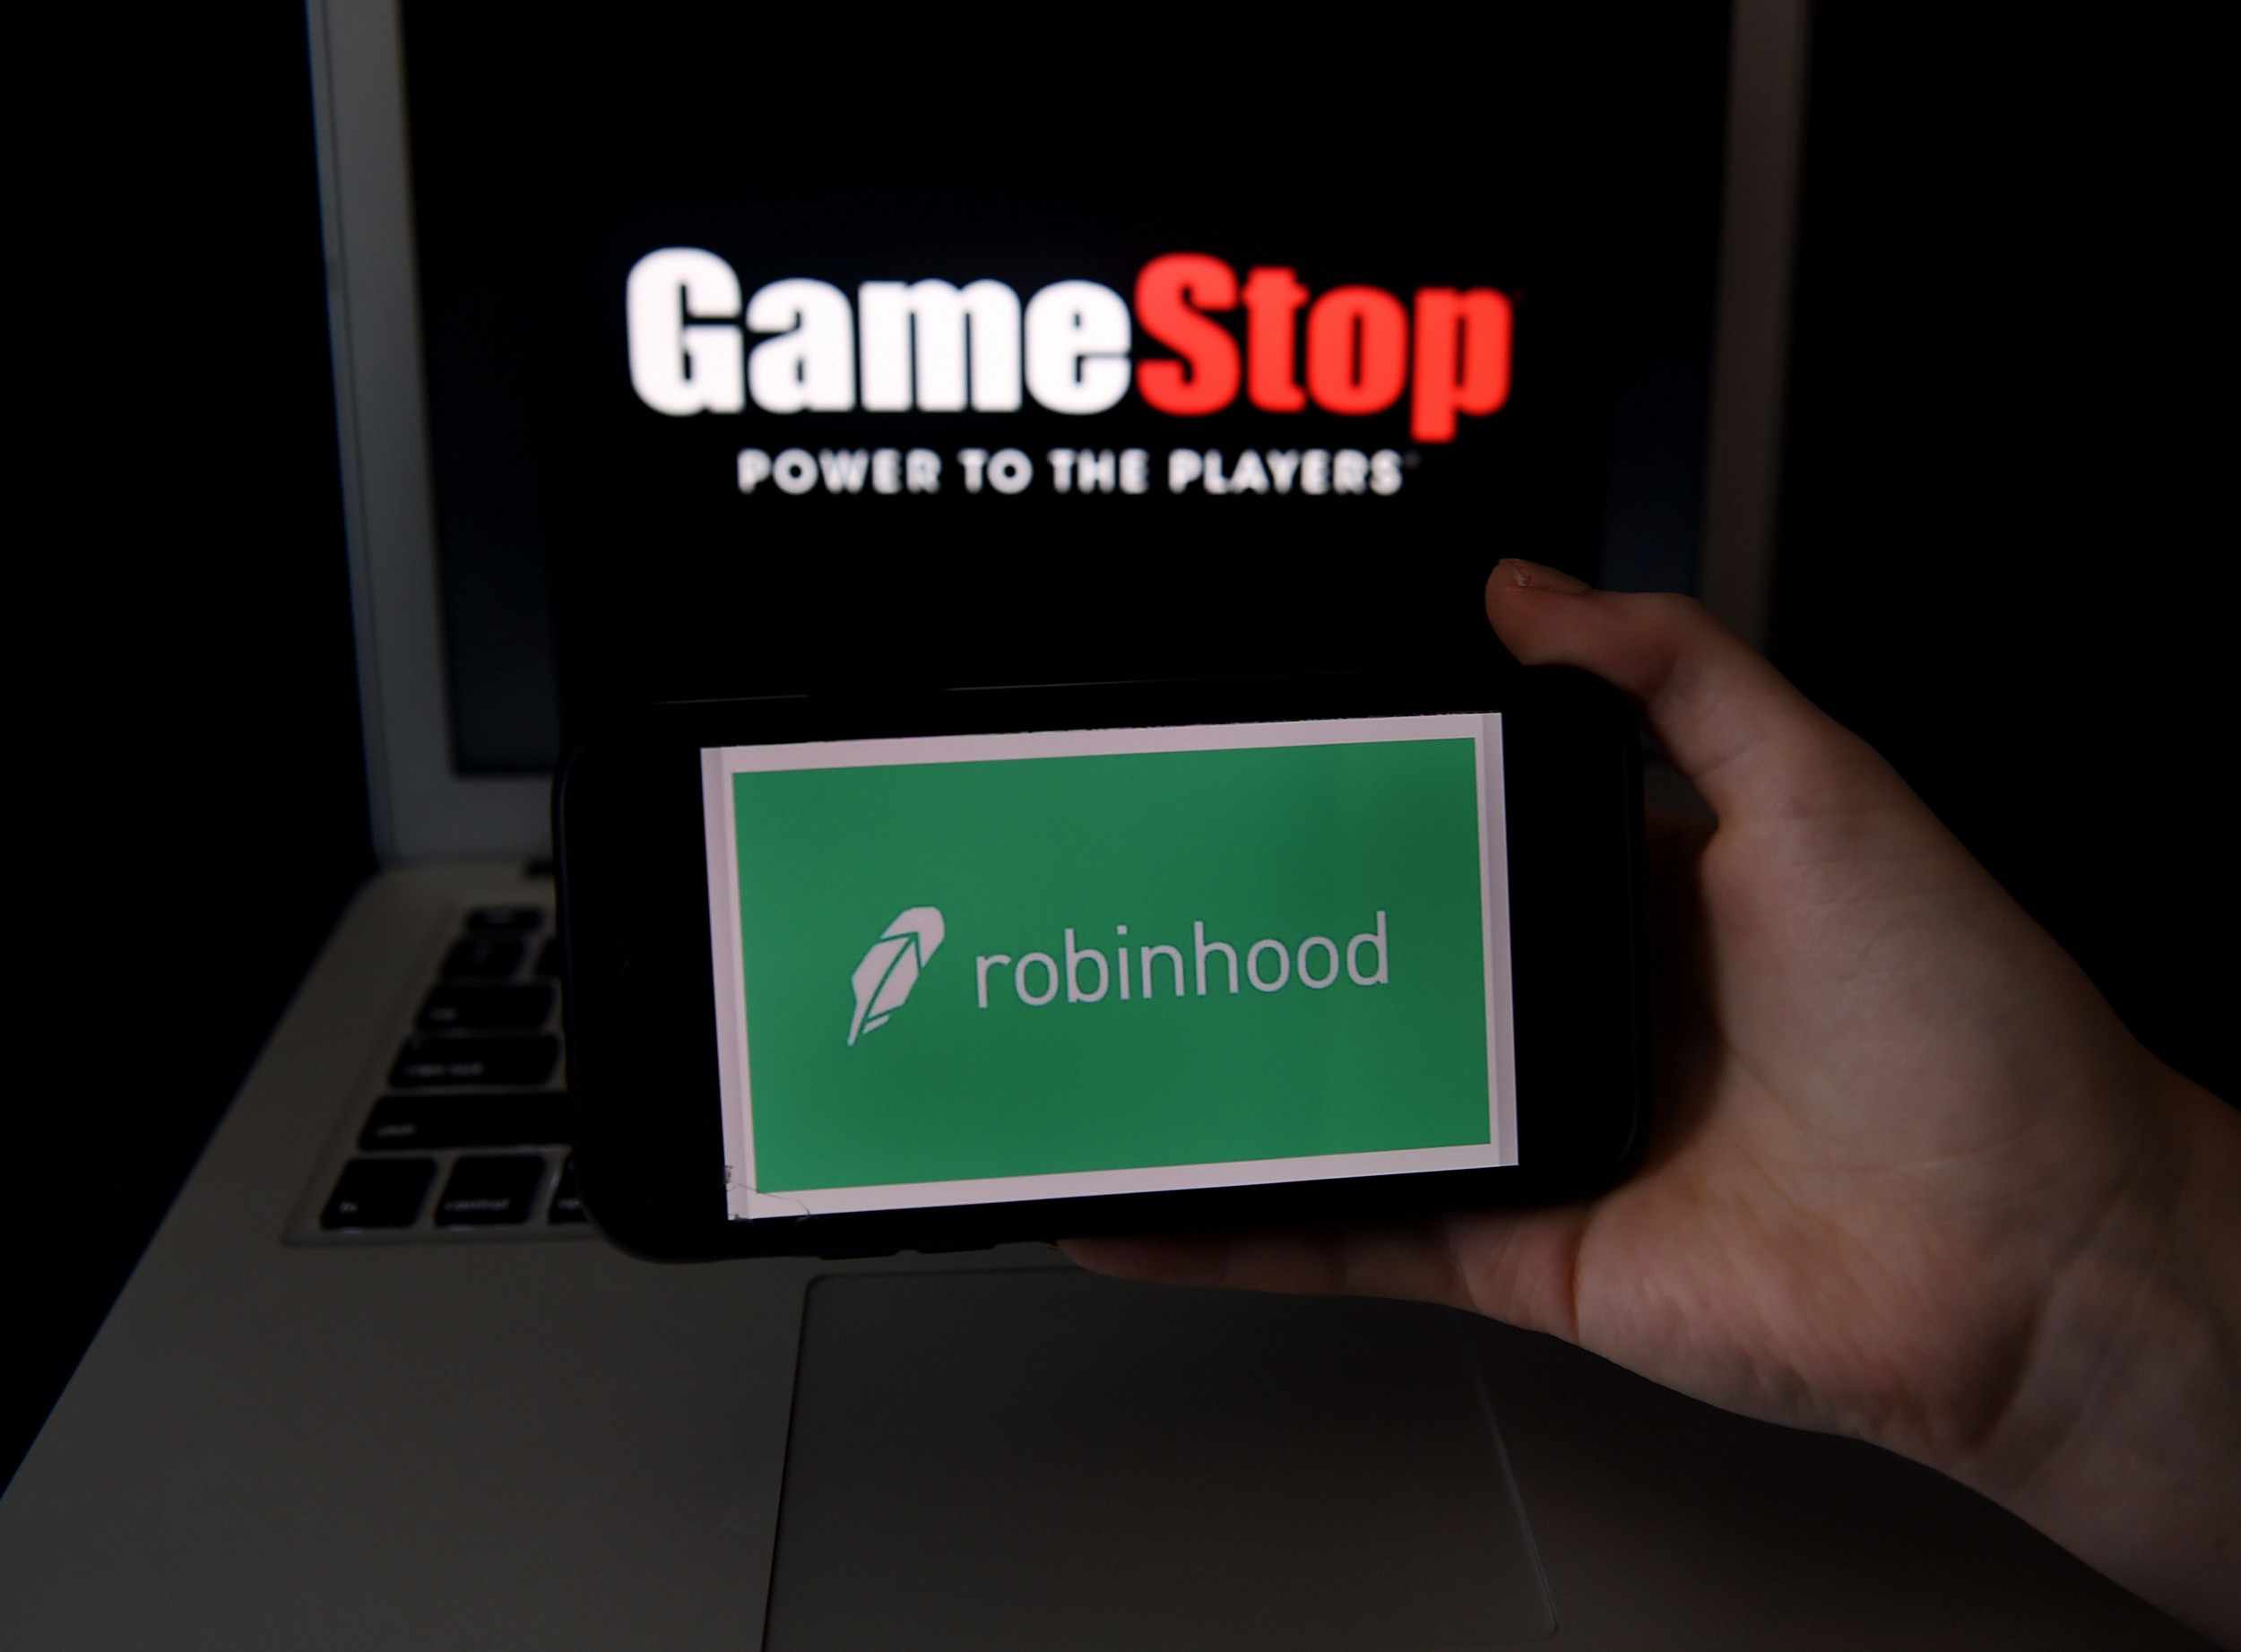 gamestop reddit robinhood ceos live